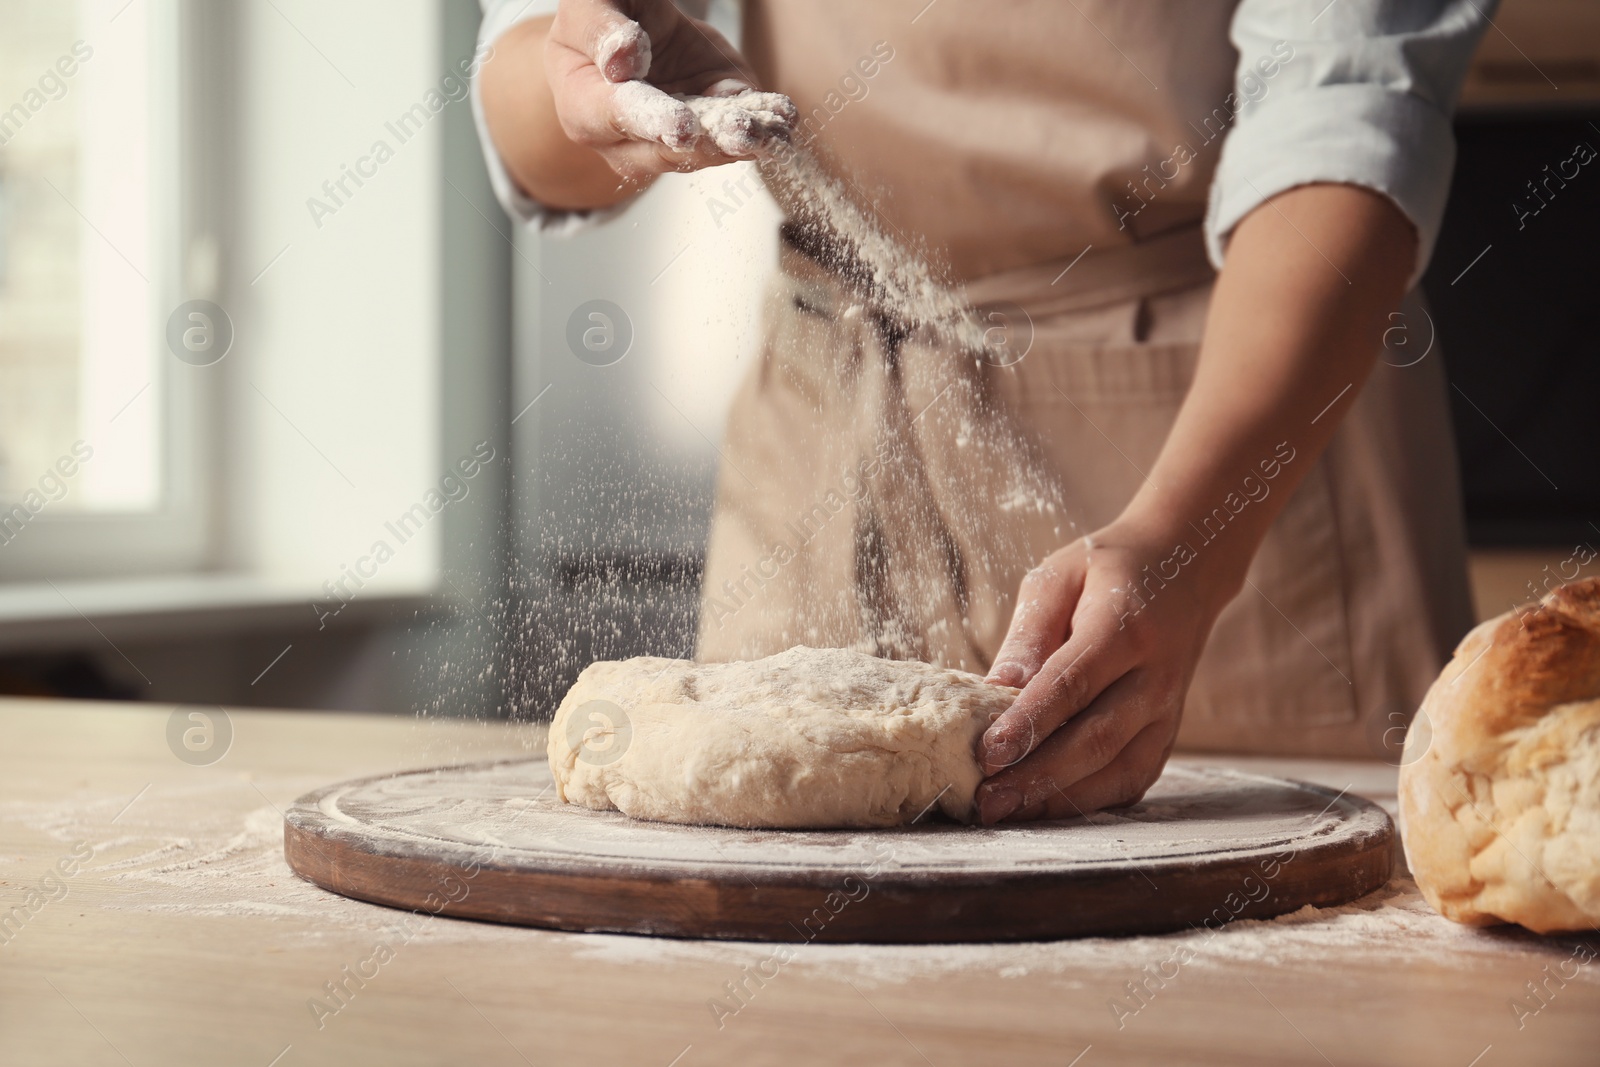 Photo of Female baker preparing bread dough at table, closeup